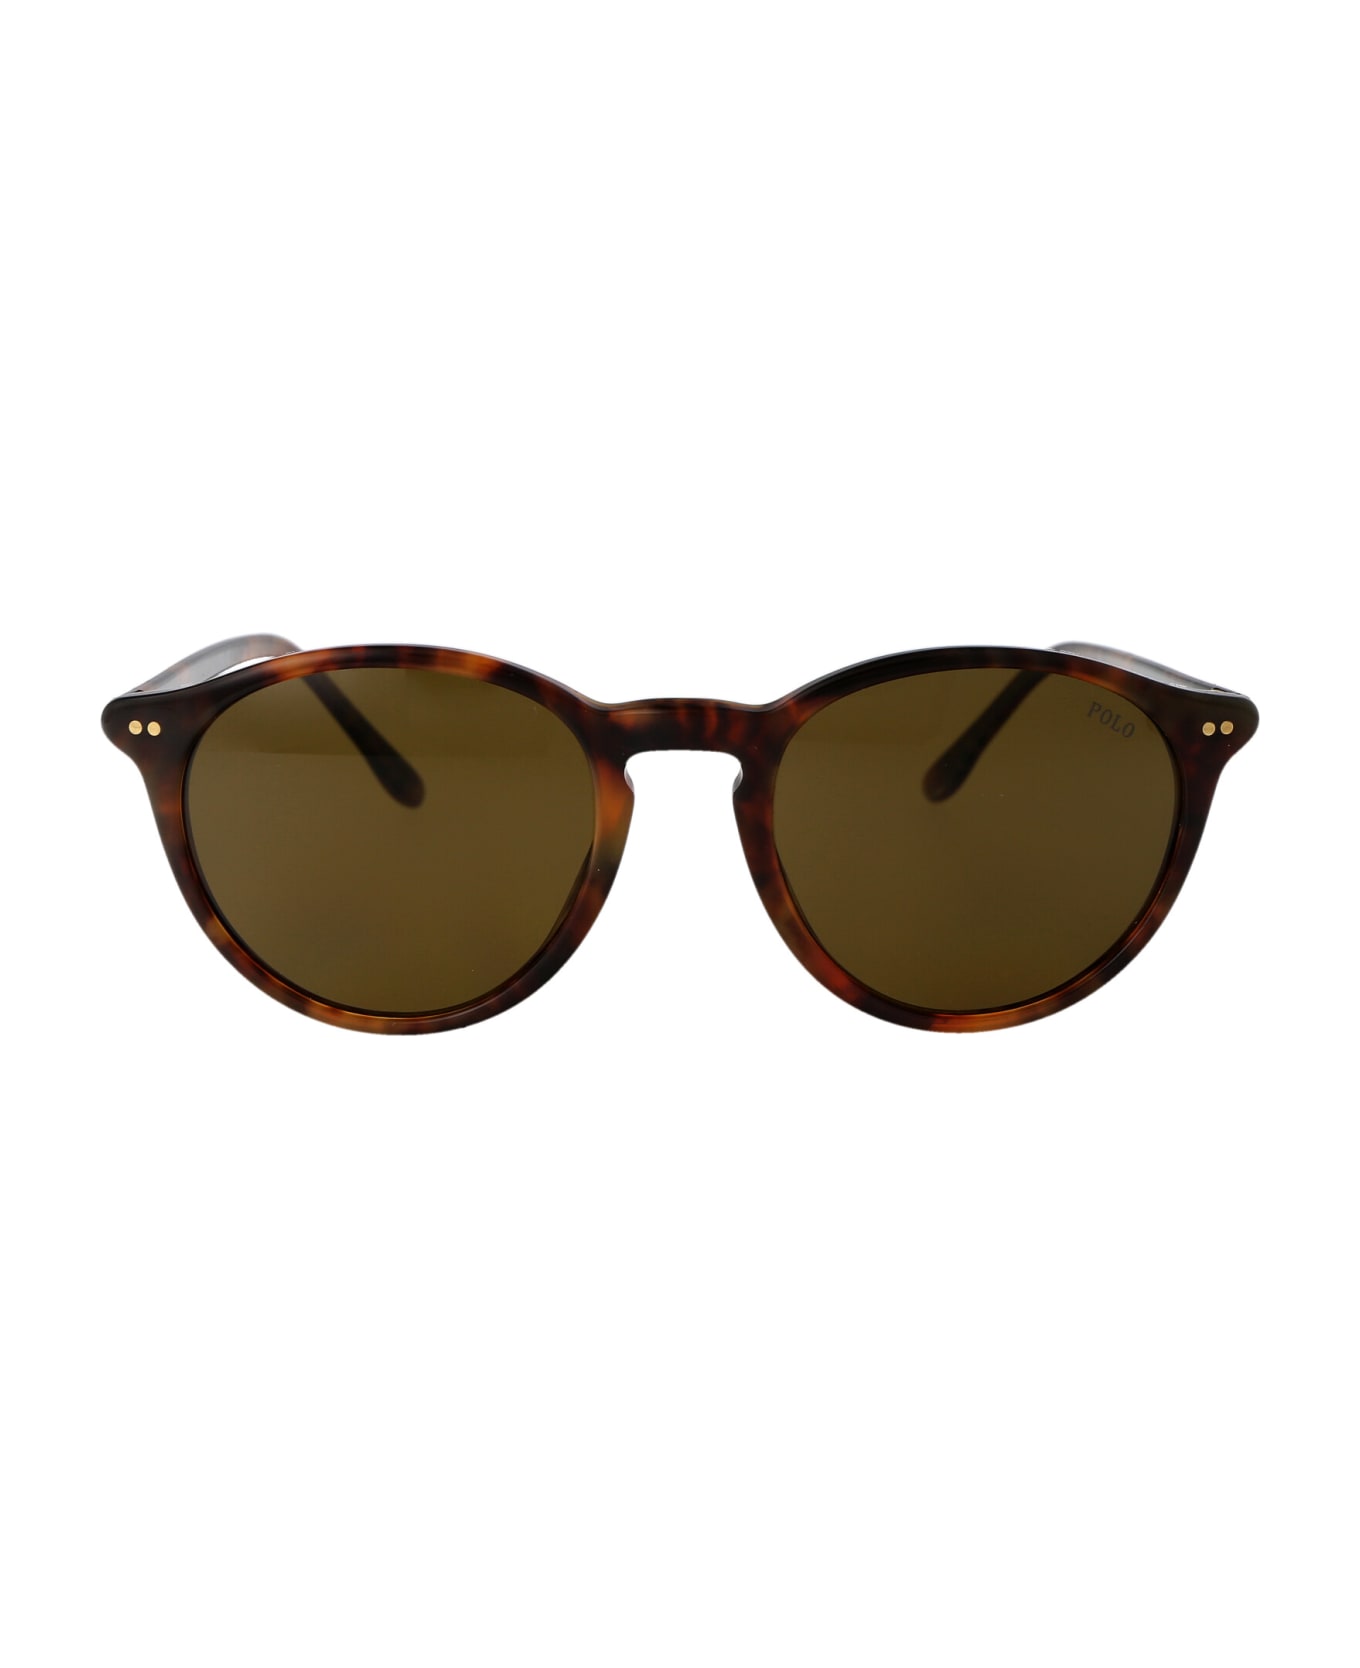 Polo Ralph Lauren 0ph4193 Sunglasses - 501773 Shiny Beige Tortoise